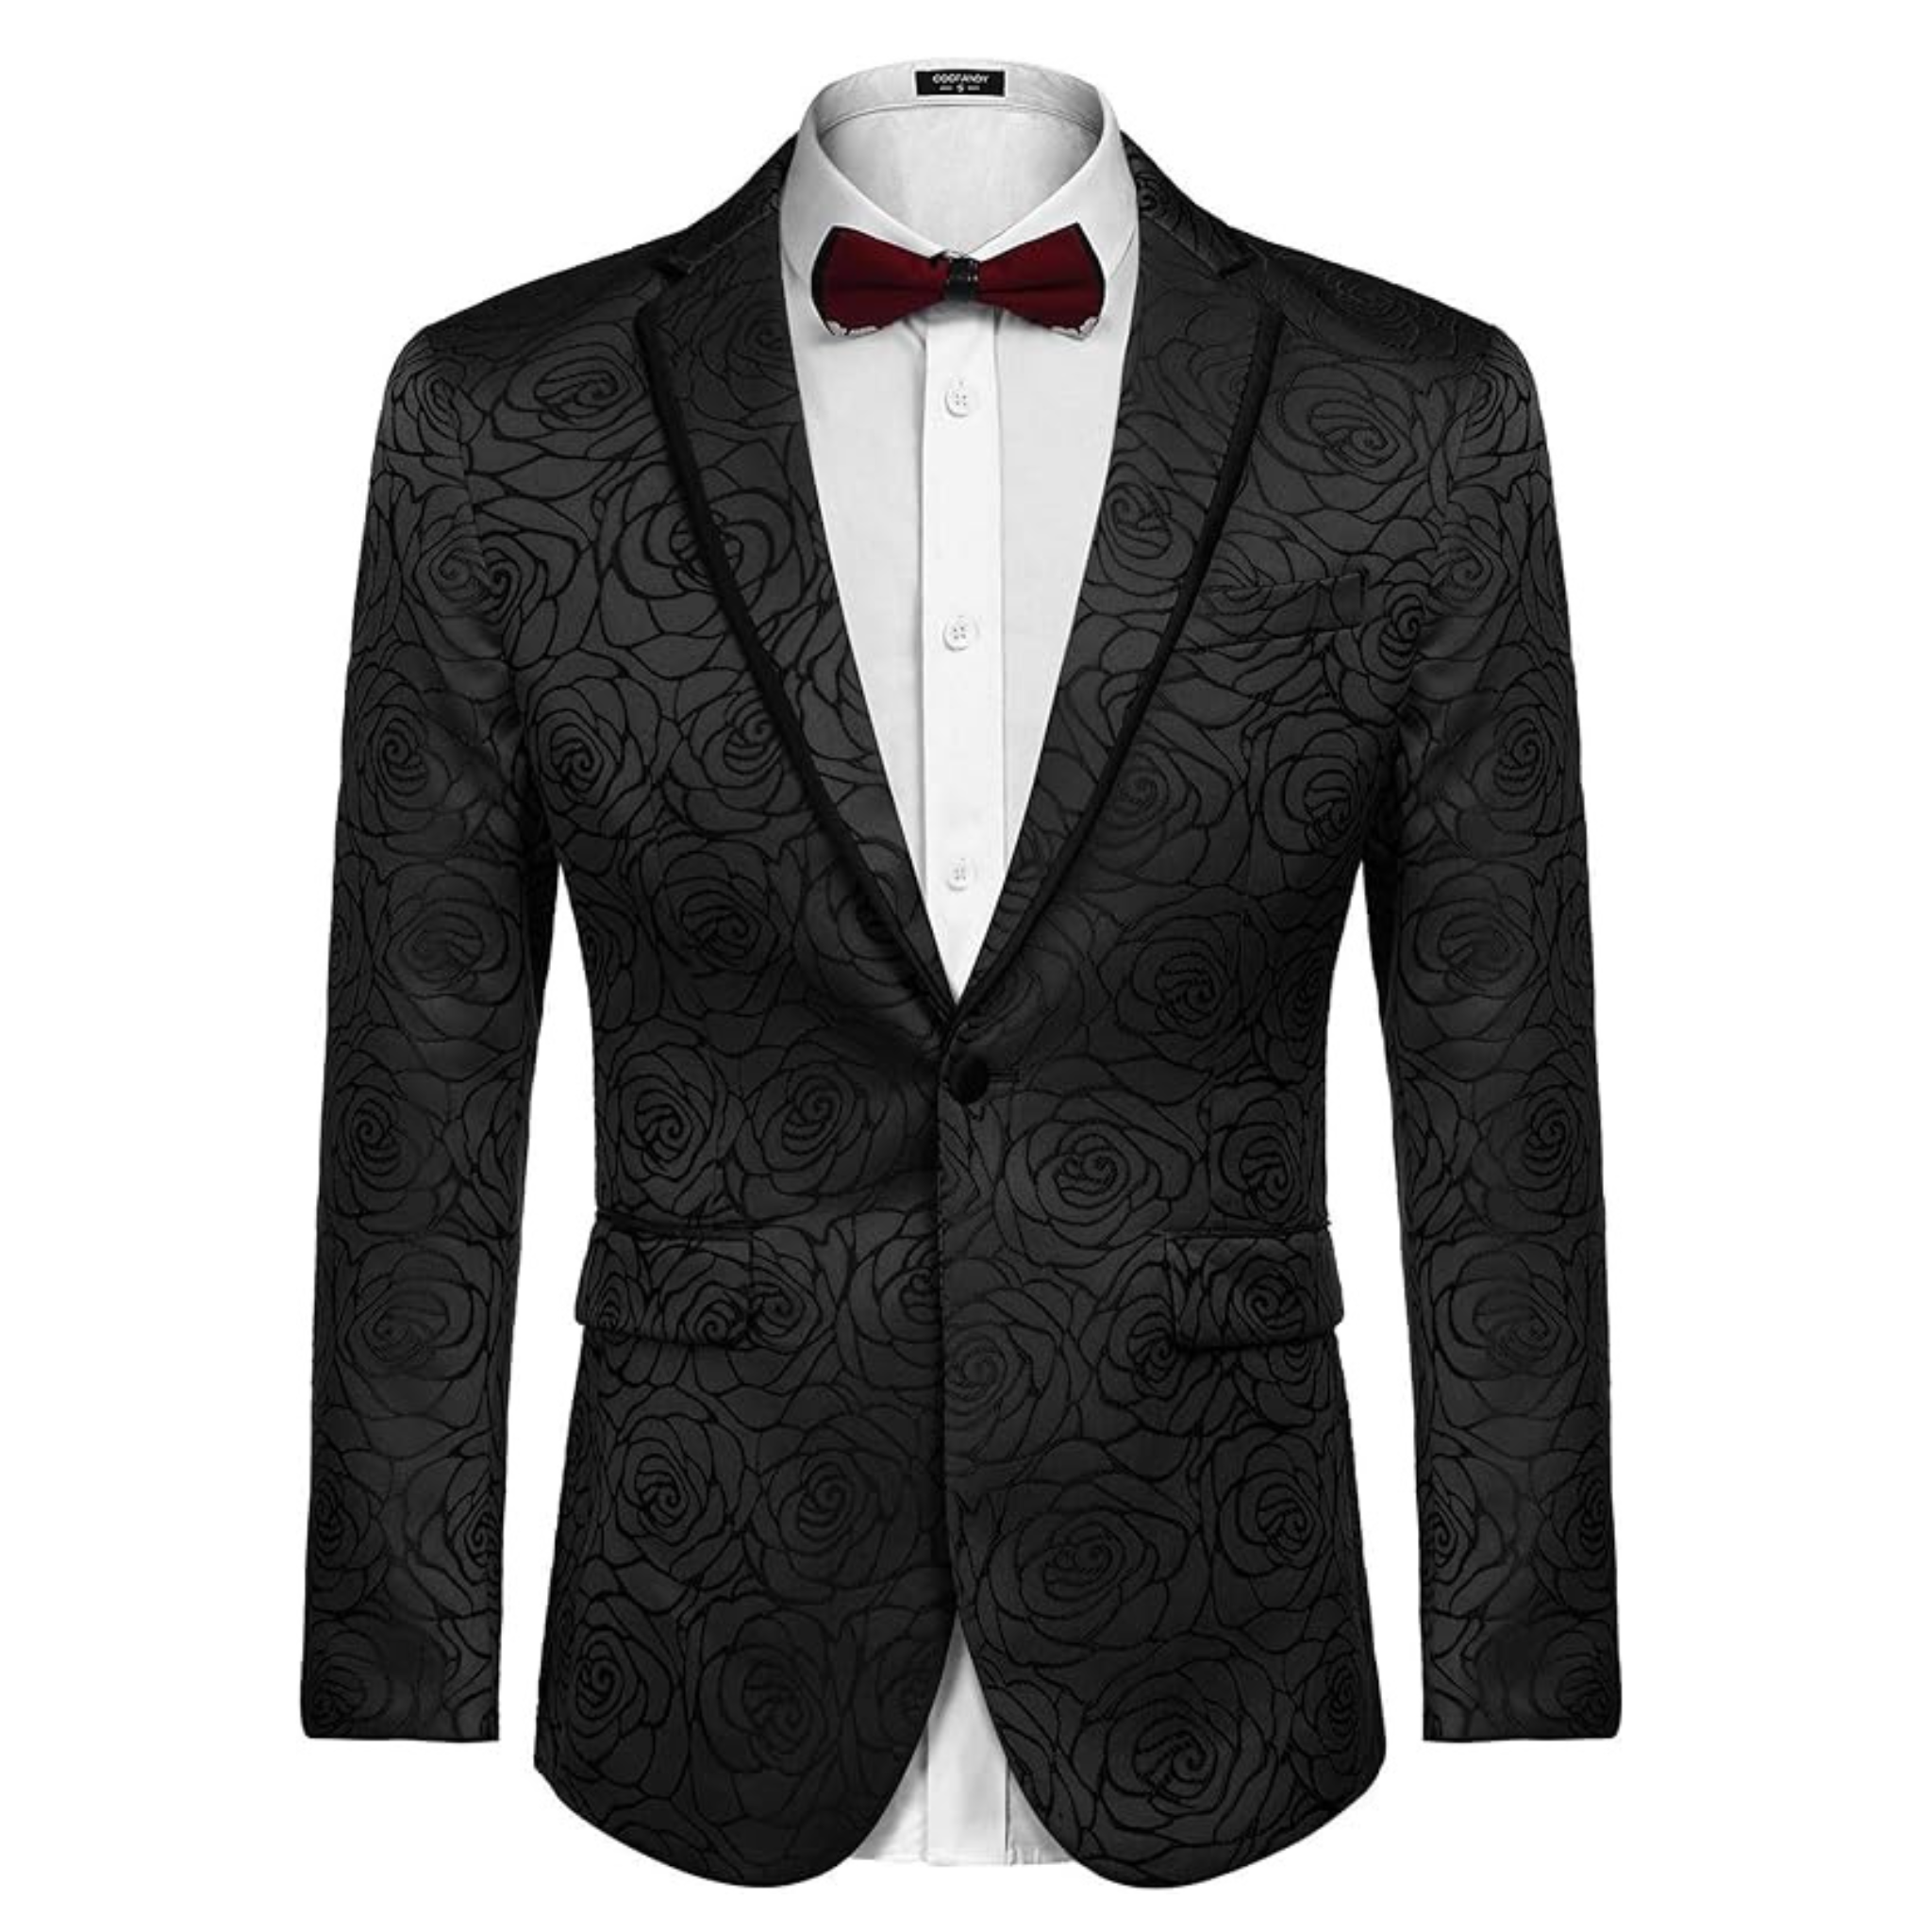 COOFANDY Men's Paisley Blazer Fashion Suit Jacket